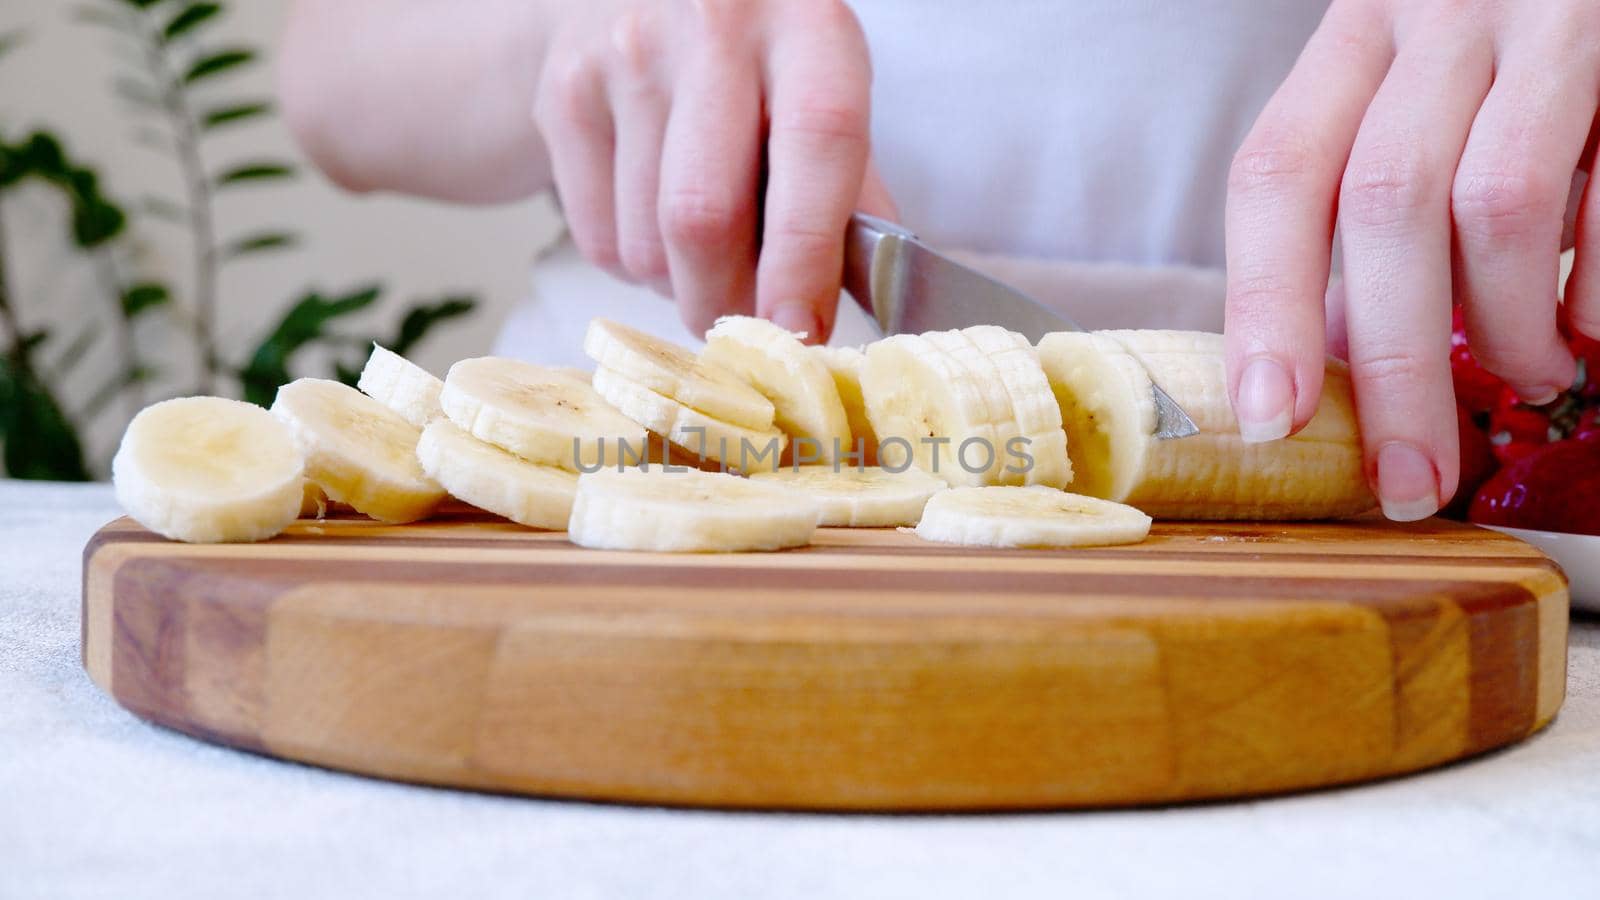 Woman cutting banana on wooden board and preparing smoothie or milkshake by Svetlana_Belozerova